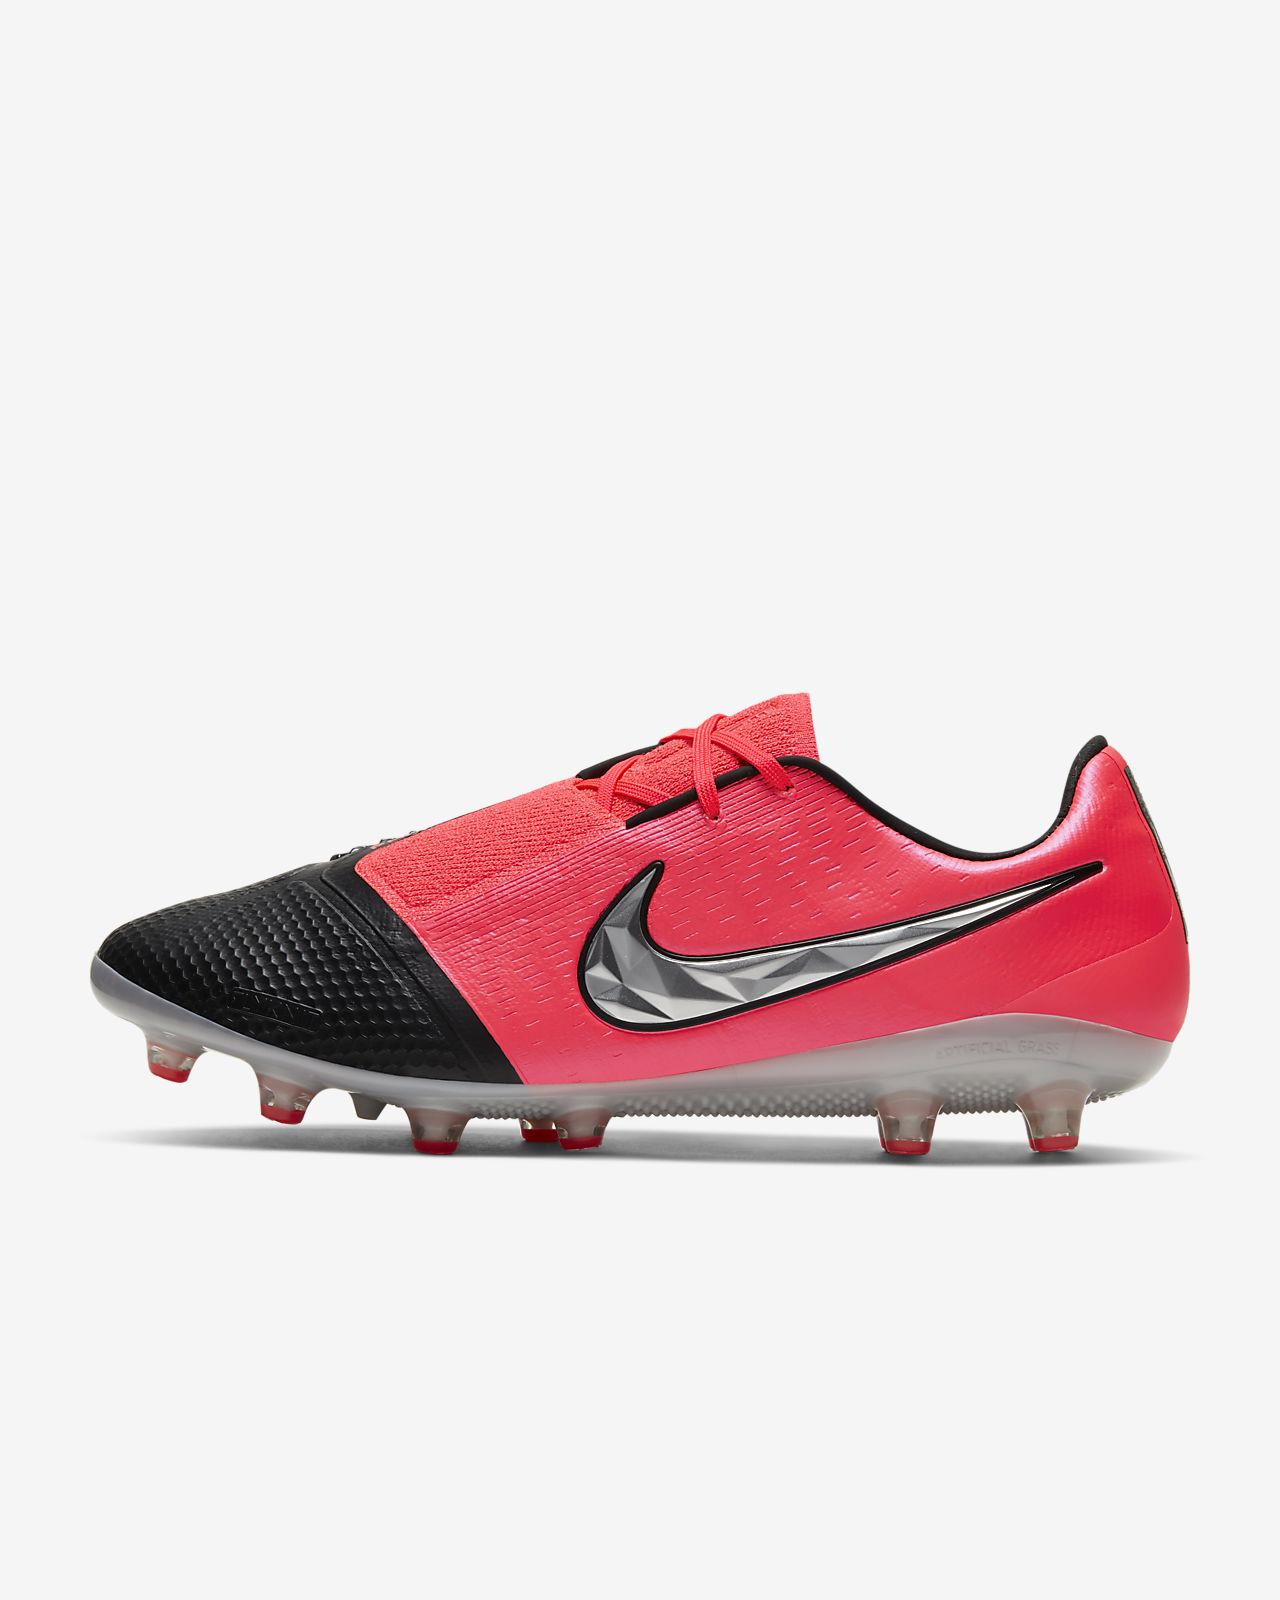 Details about Nike Hypervenom Phantom Vision Academy FG Football Sock Boots  Uk Size 8.5 43 New